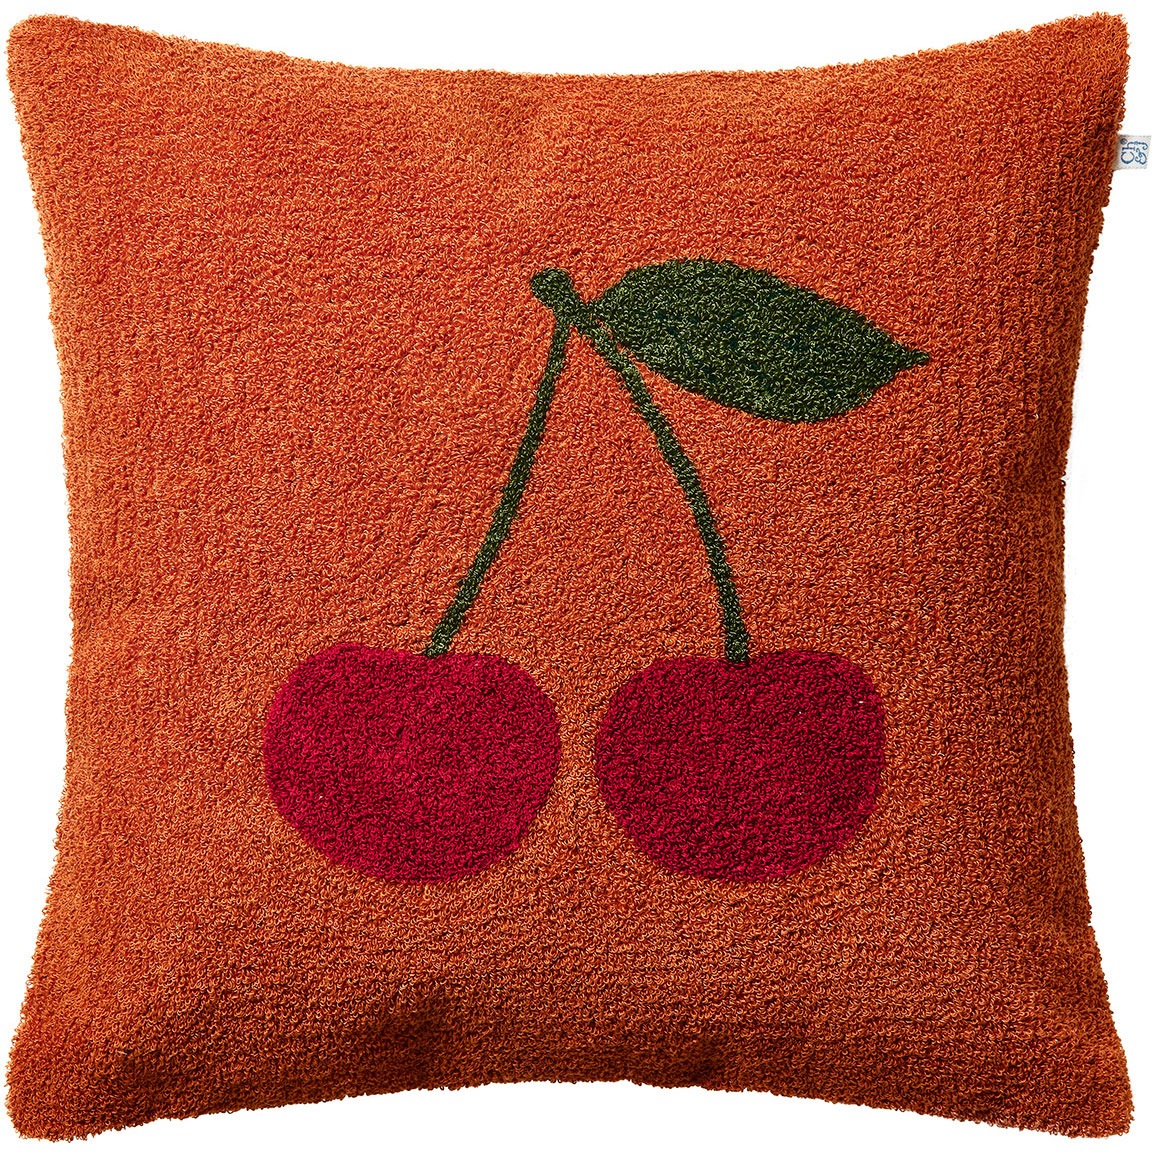 Cherry Cushion Cover 50x50 cm / Apricot Orange / Green / Red